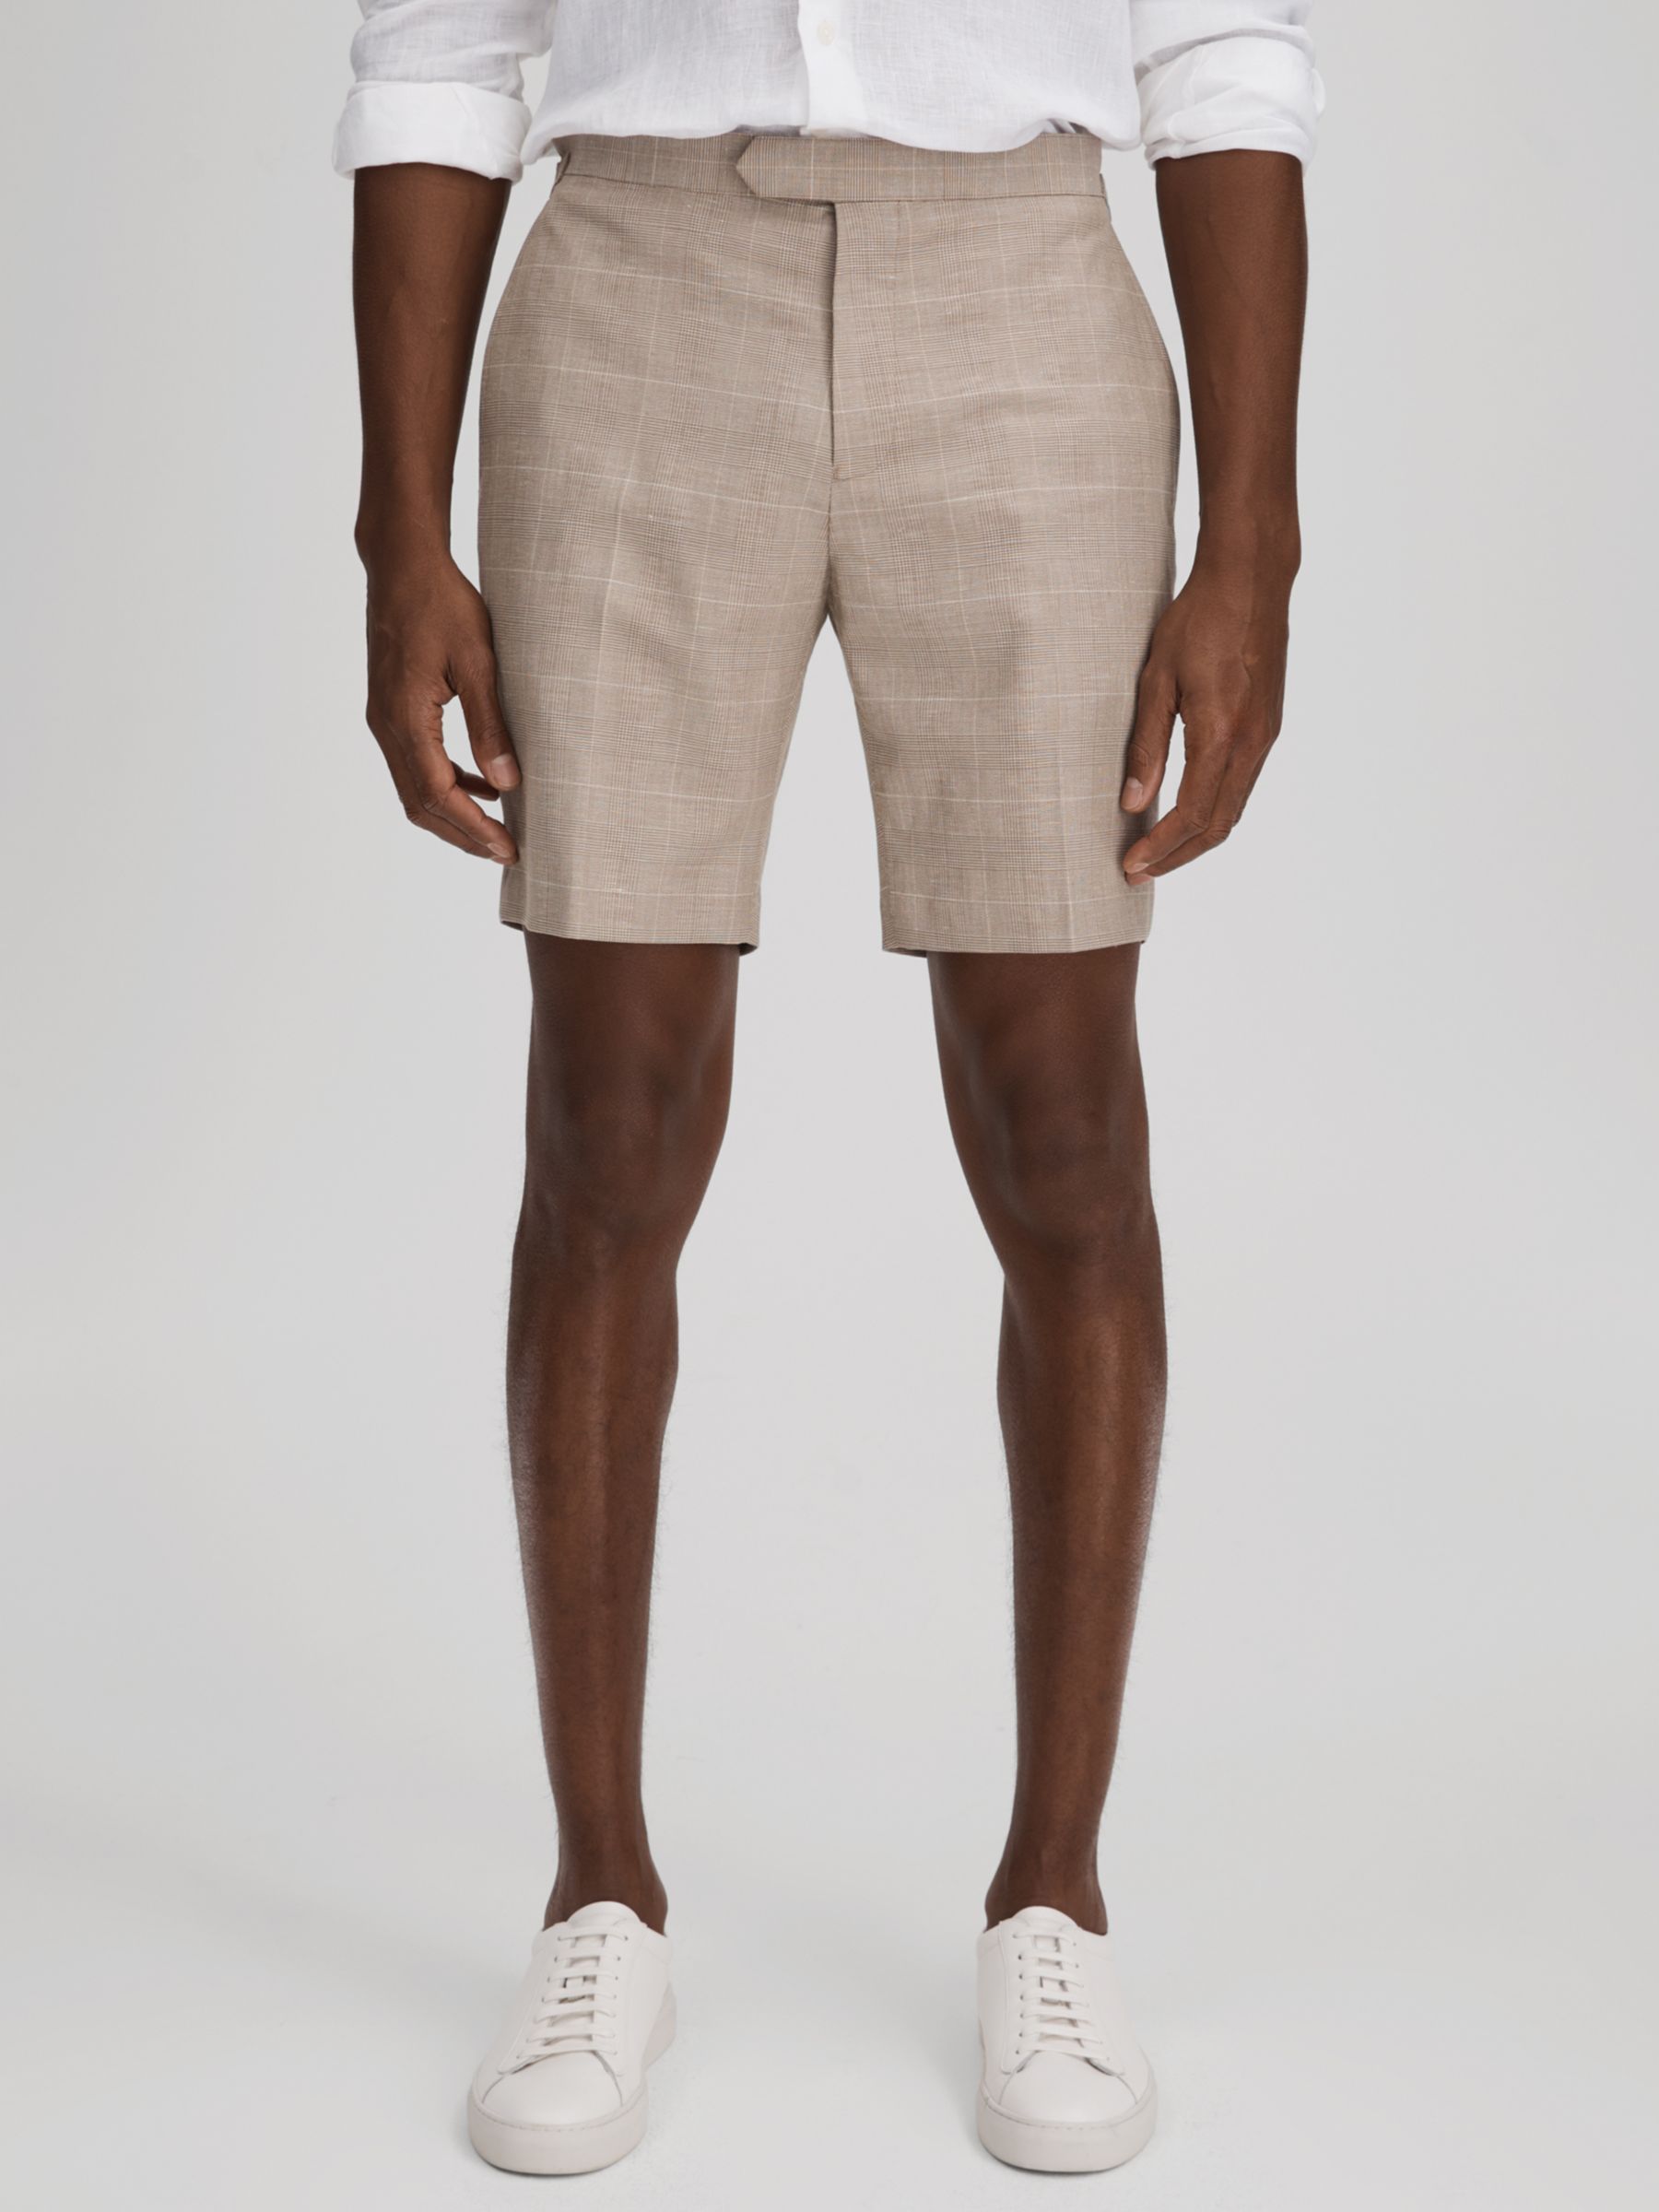 Mens Sportswear Shorts Mens Running & Gym Shorts - Reiss USA, sportswear  shorts